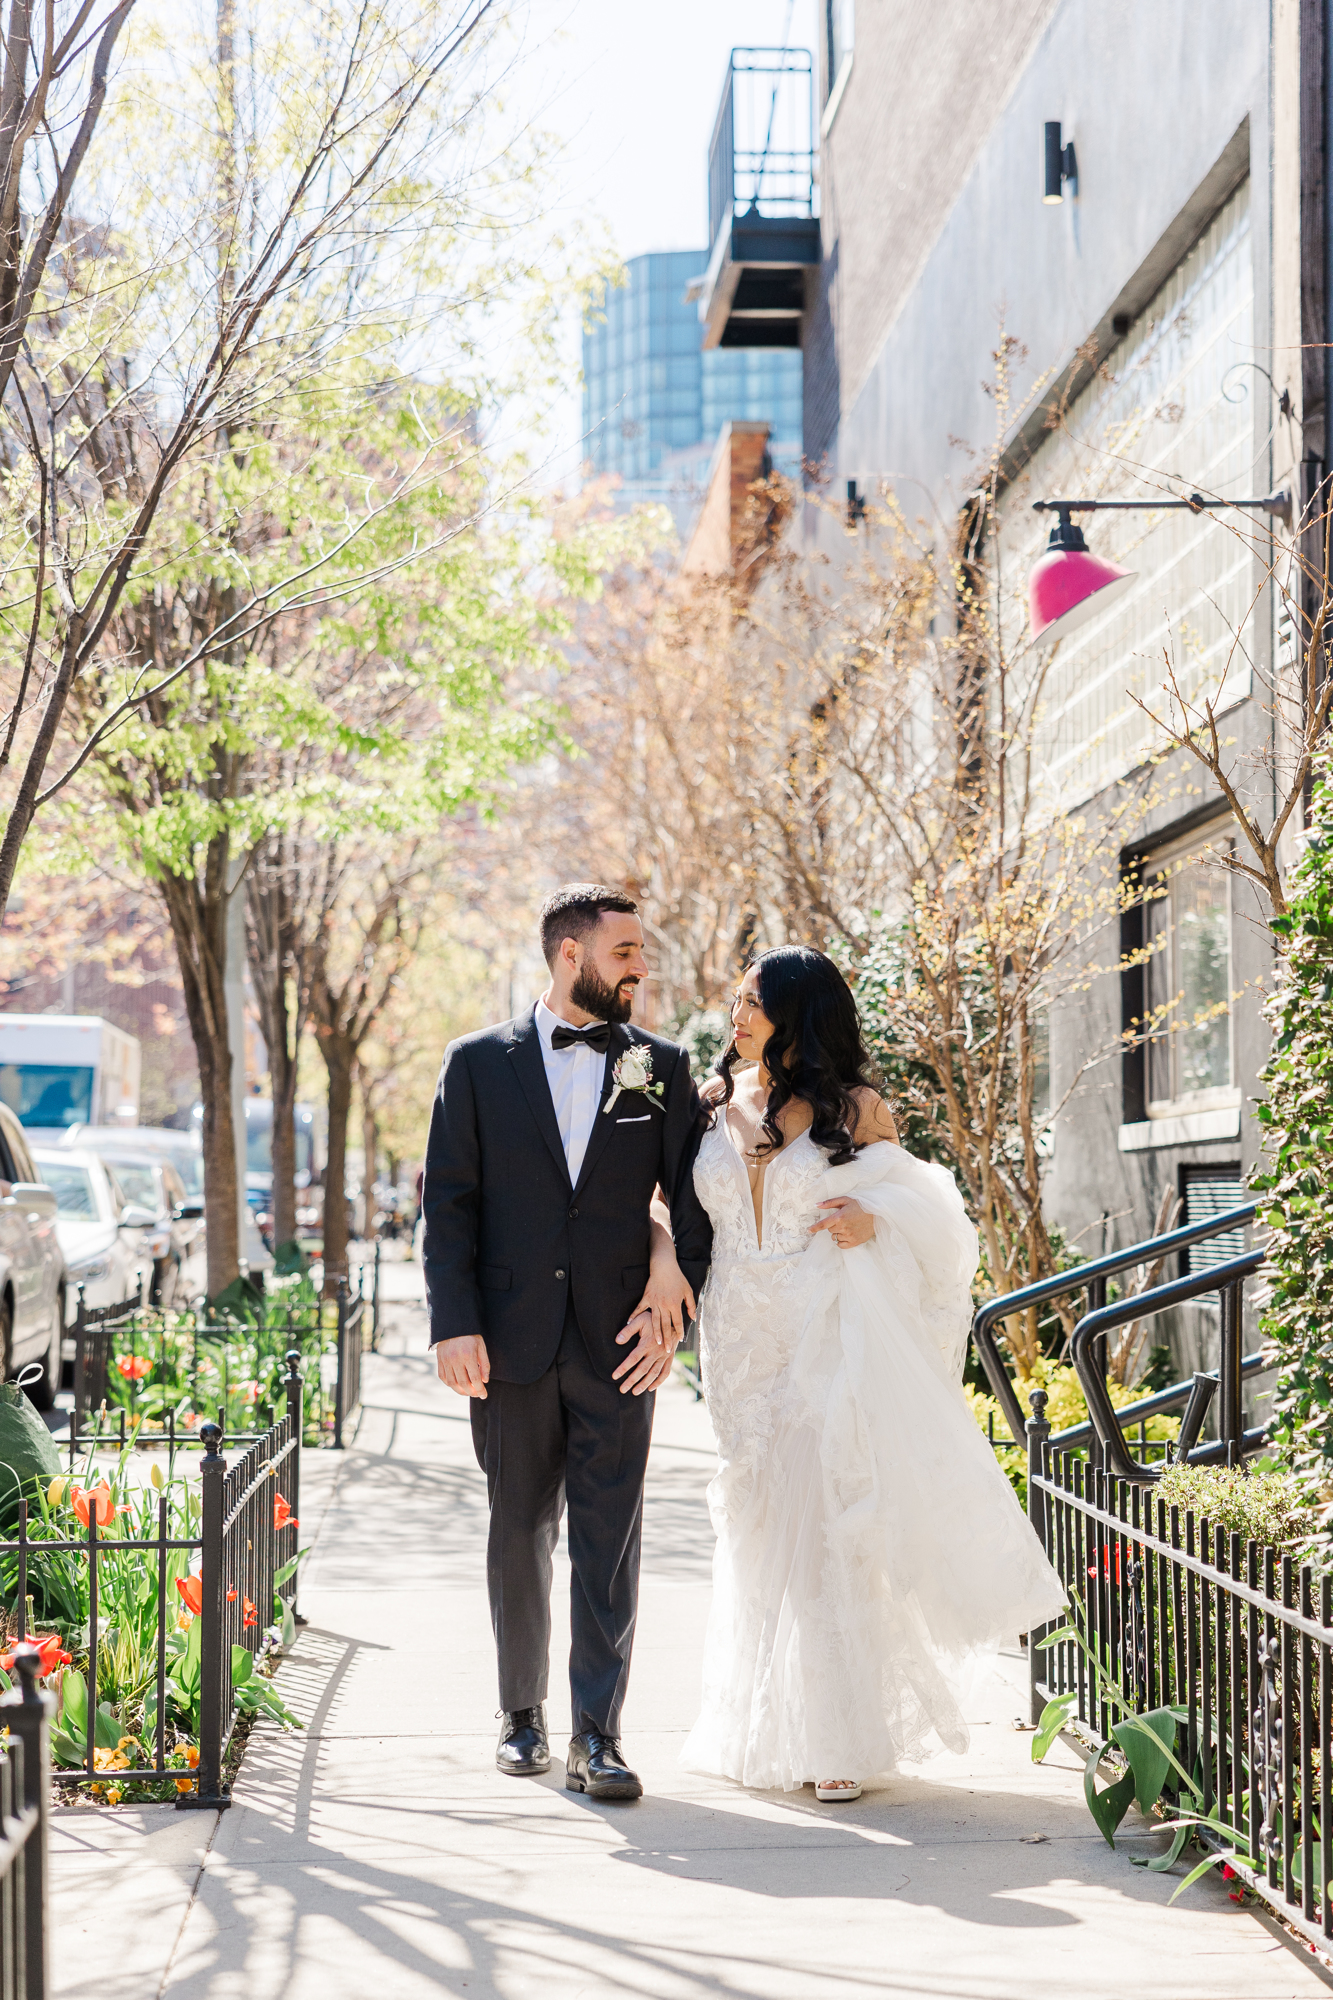 Intimate Springtime Wedding In New York